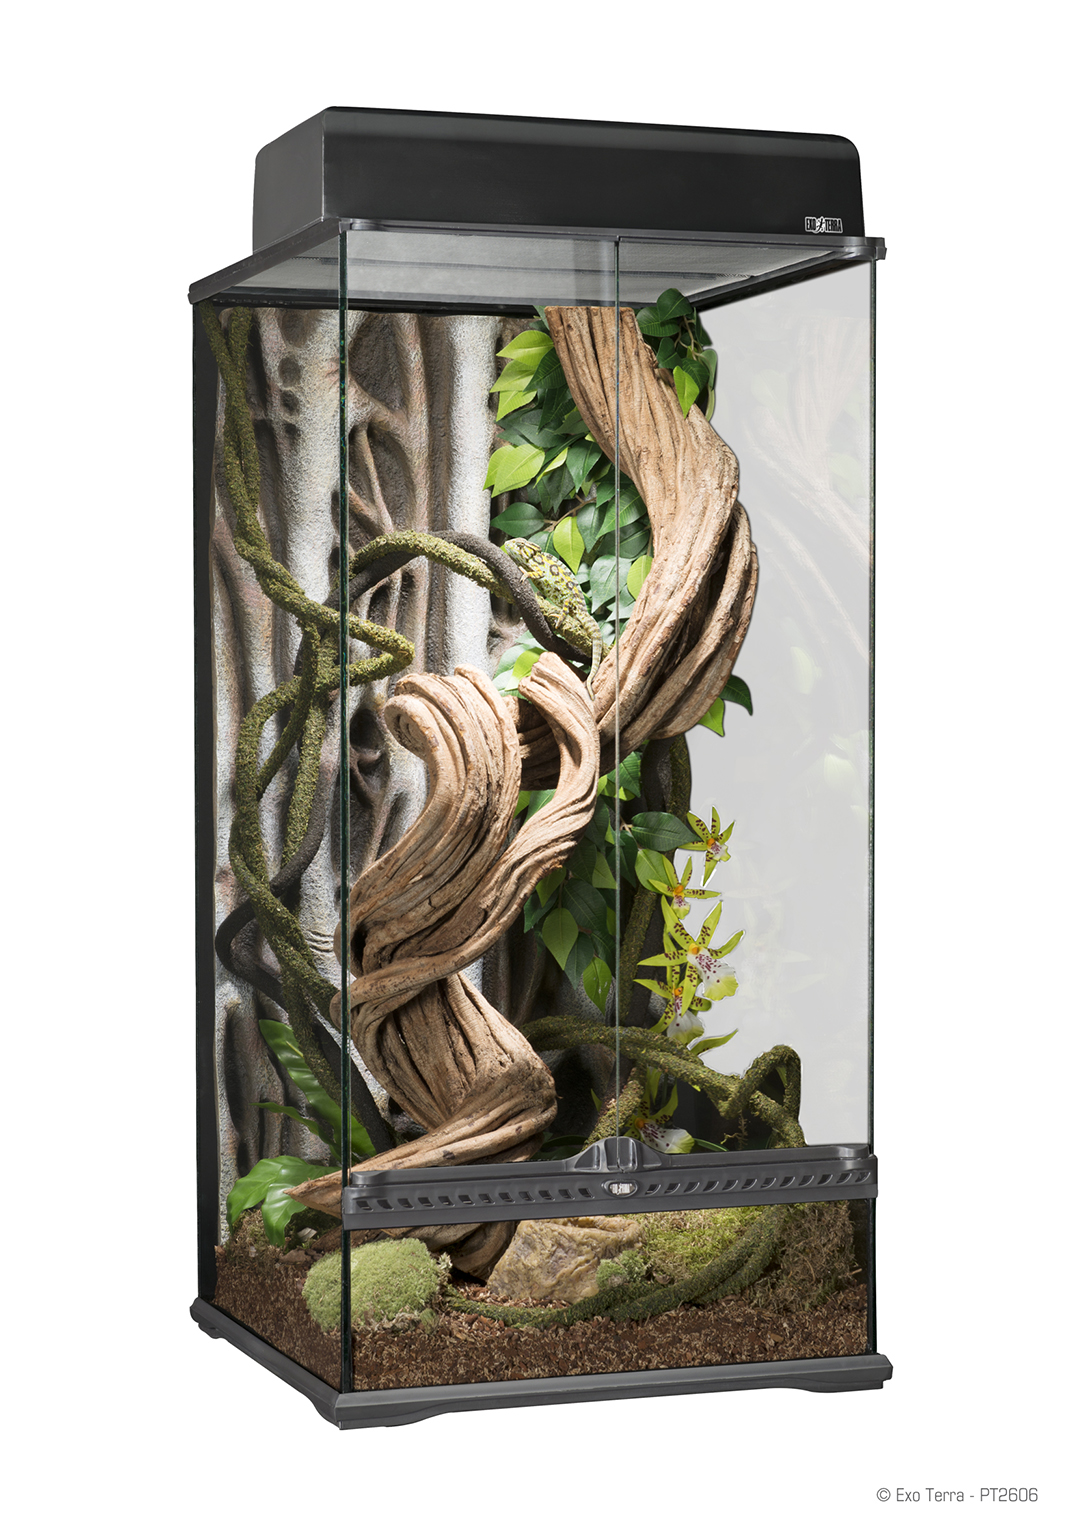 Dreigend Modderig arm Exo Terra Rainforest Terrarium Paludarium - 45x45x90cm -  Reptielenspullenkopen.nl